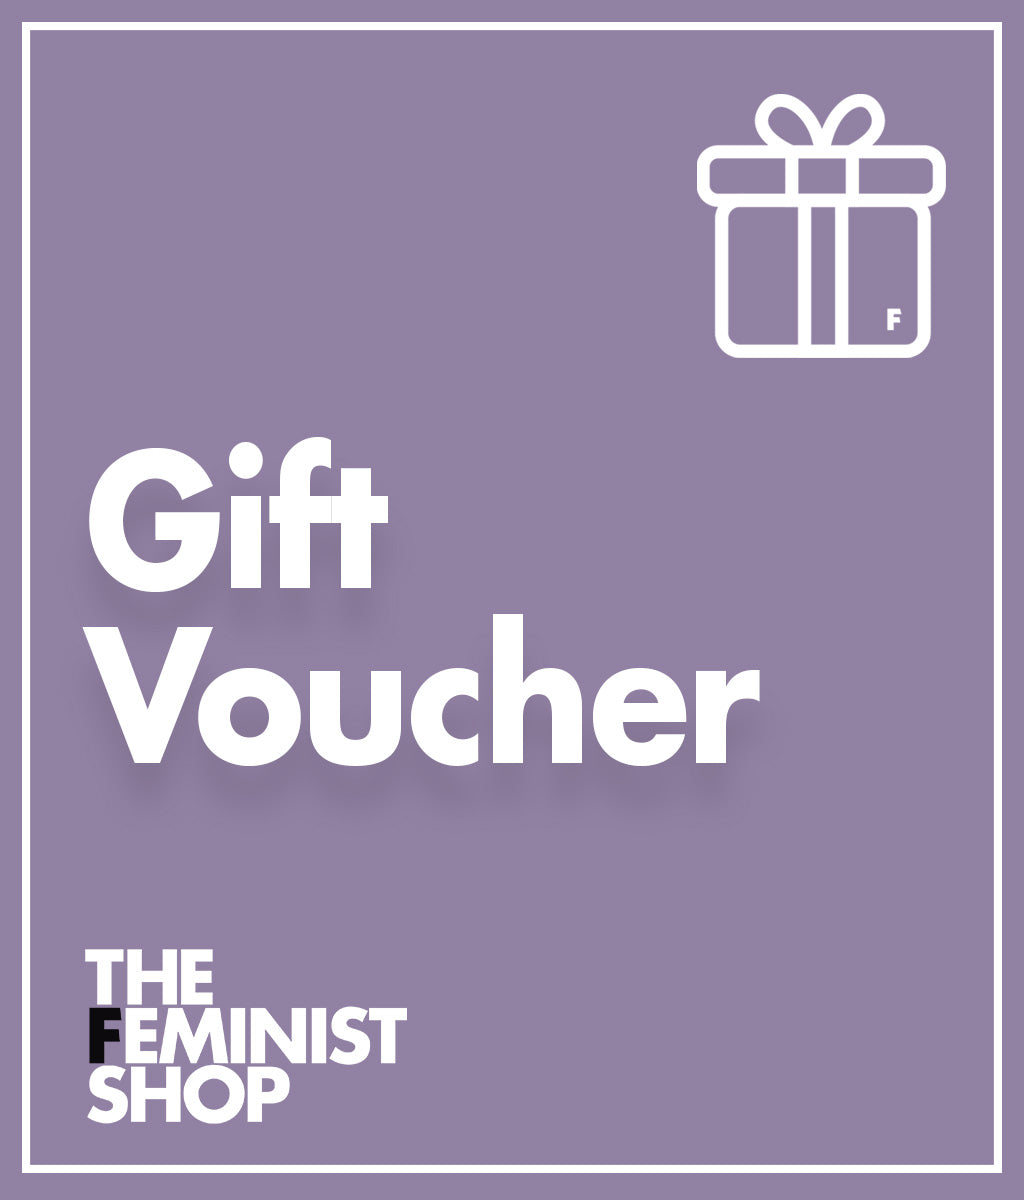 The Feminist Shop Gift Card Voucher